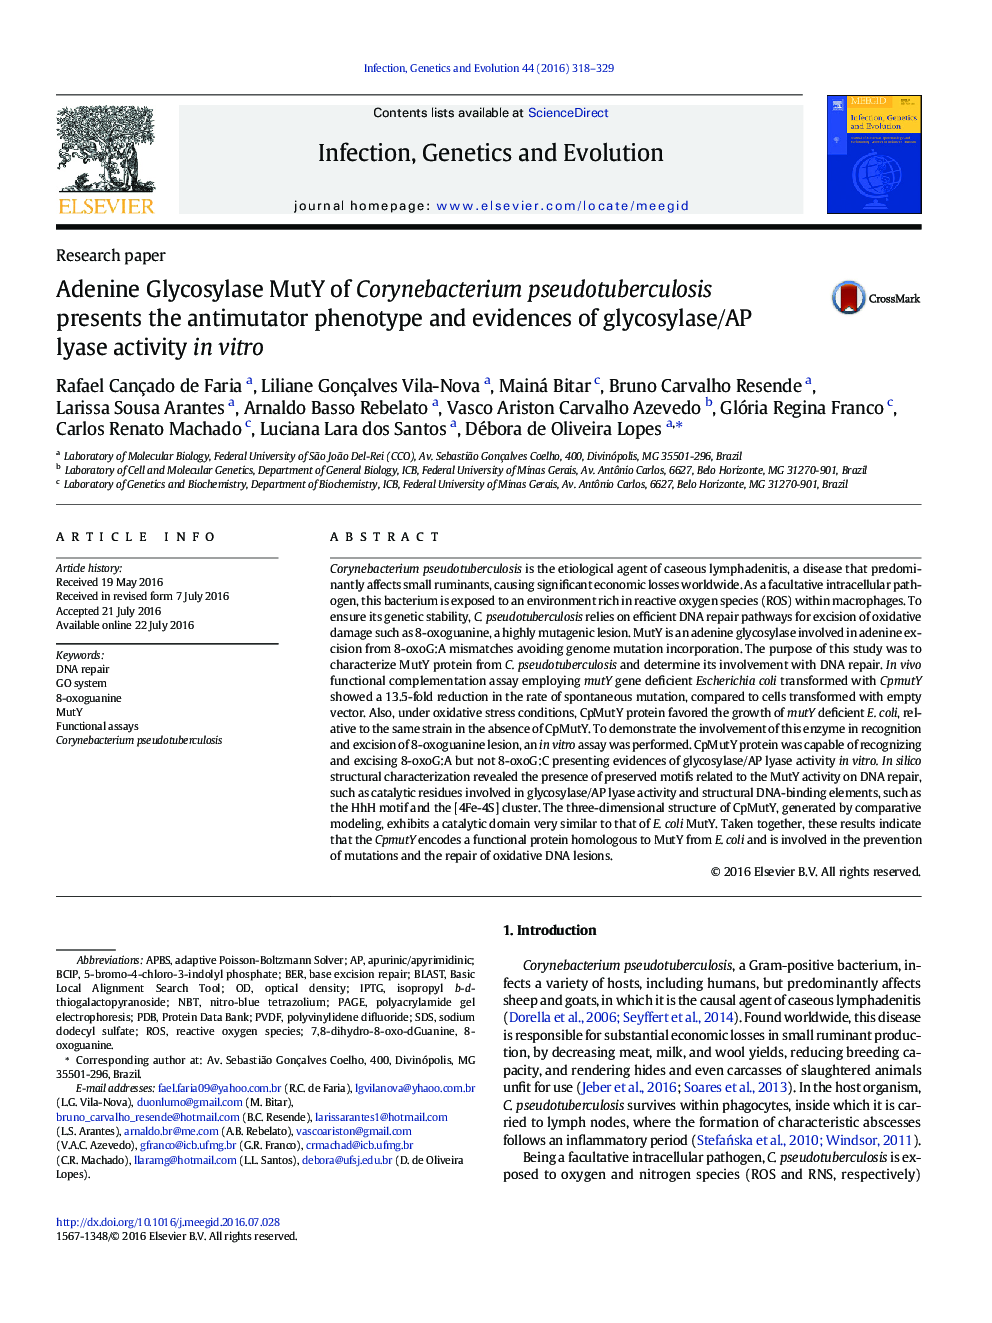 Adenine Glycosylase MutY of Corynebacterium pseudotuberculosis presents the antimutator phenotype and evidences of glycosylase/AP lyase activity in vitro